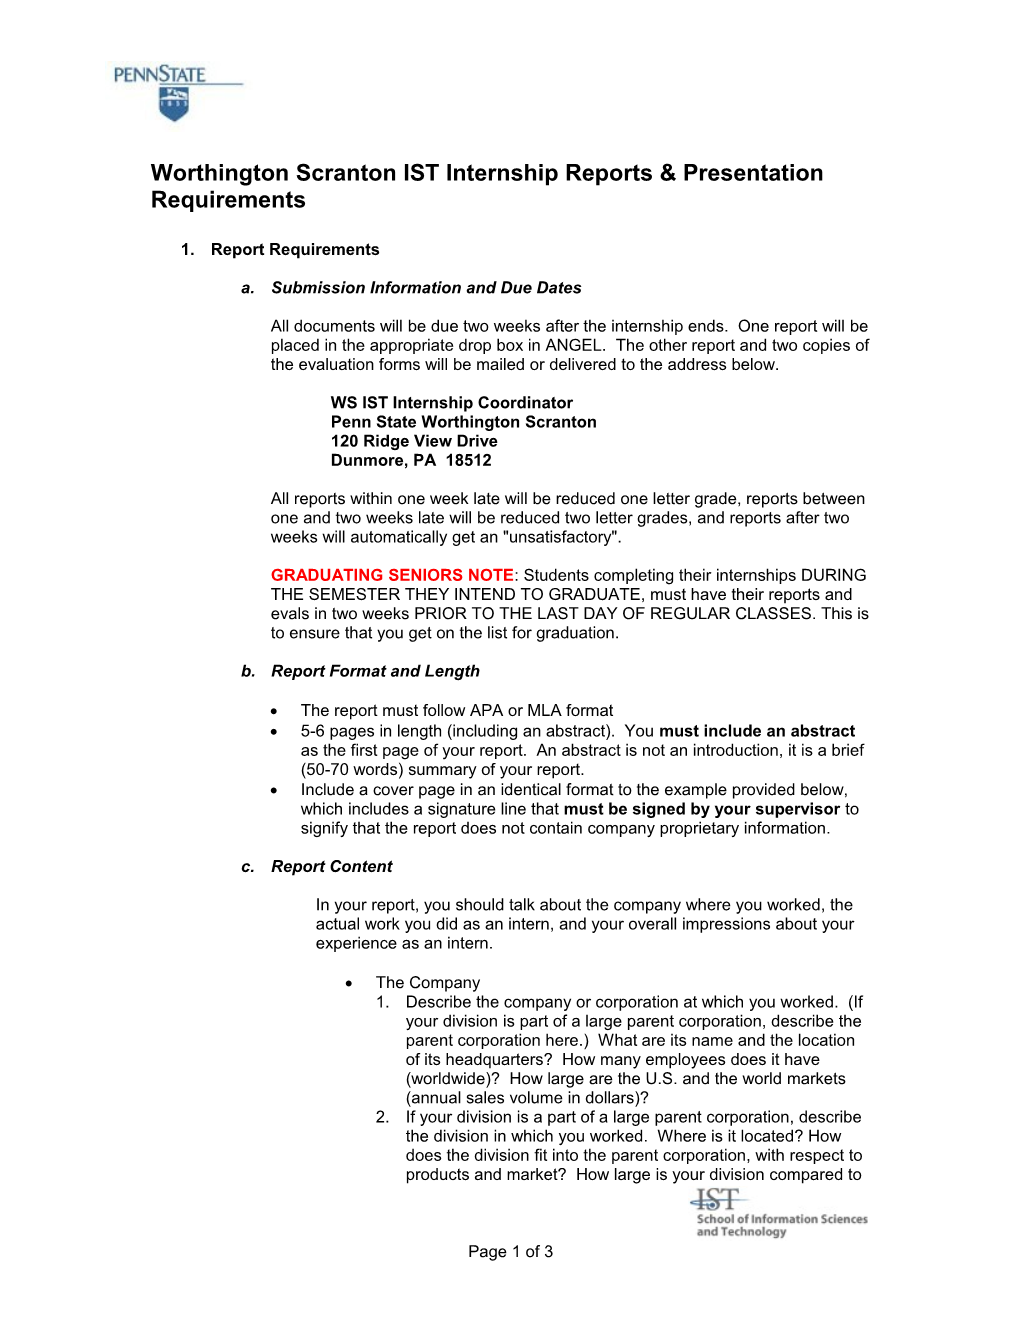 Worthington Scranton IST Internship Reports Requirements